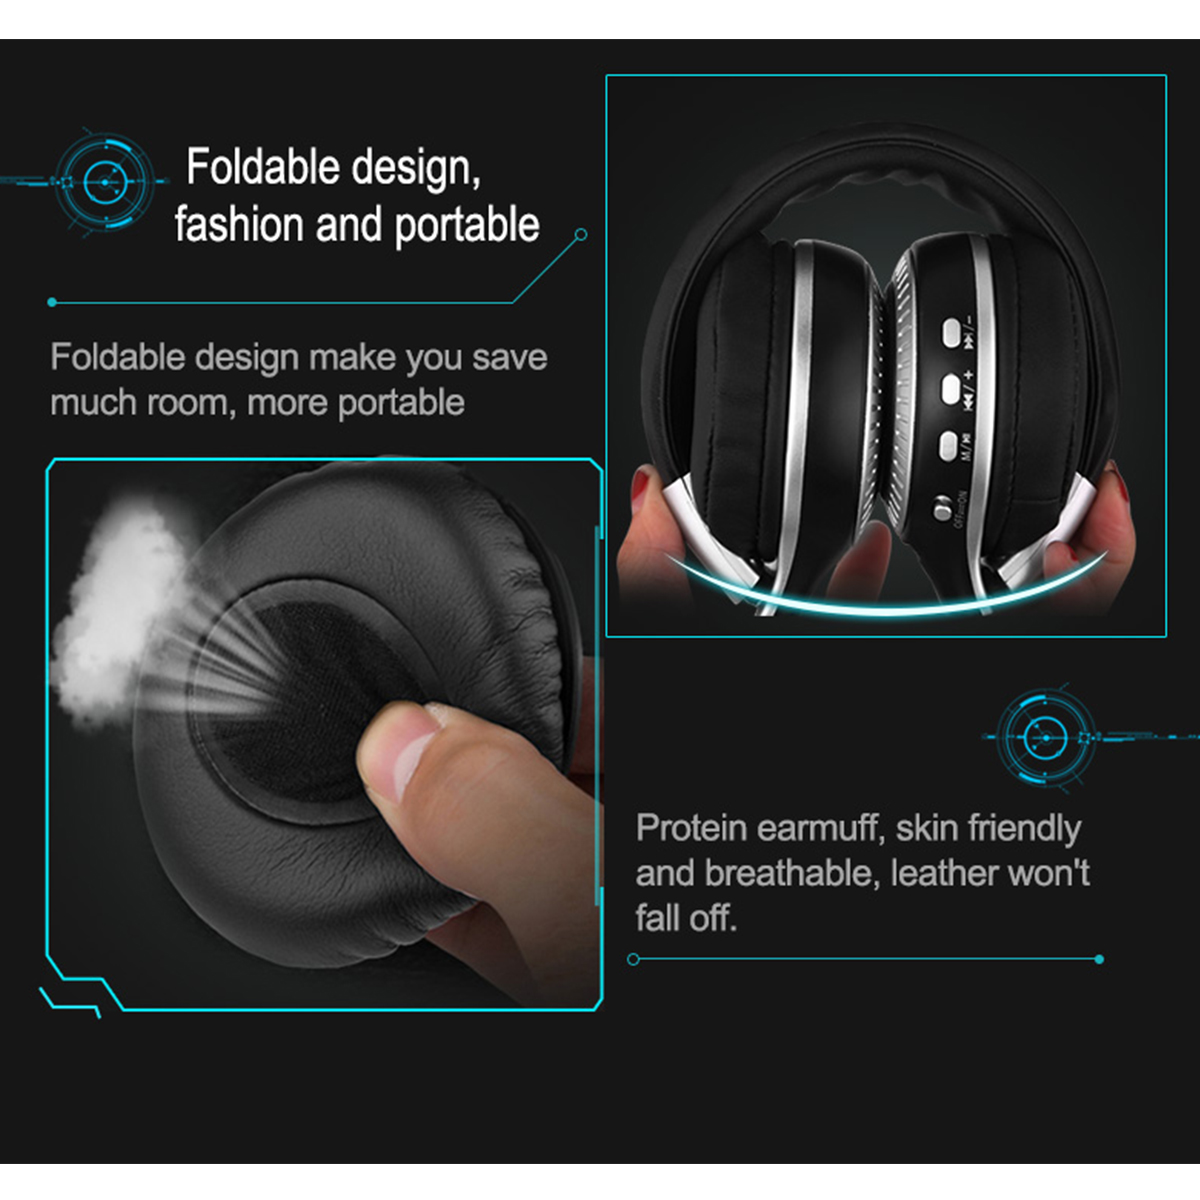 BYTELIKE Headset drahtloses Steckkarte Bluetooth-Headset Handy-Headset, Over-ear Computer schwarz Kopfhörer